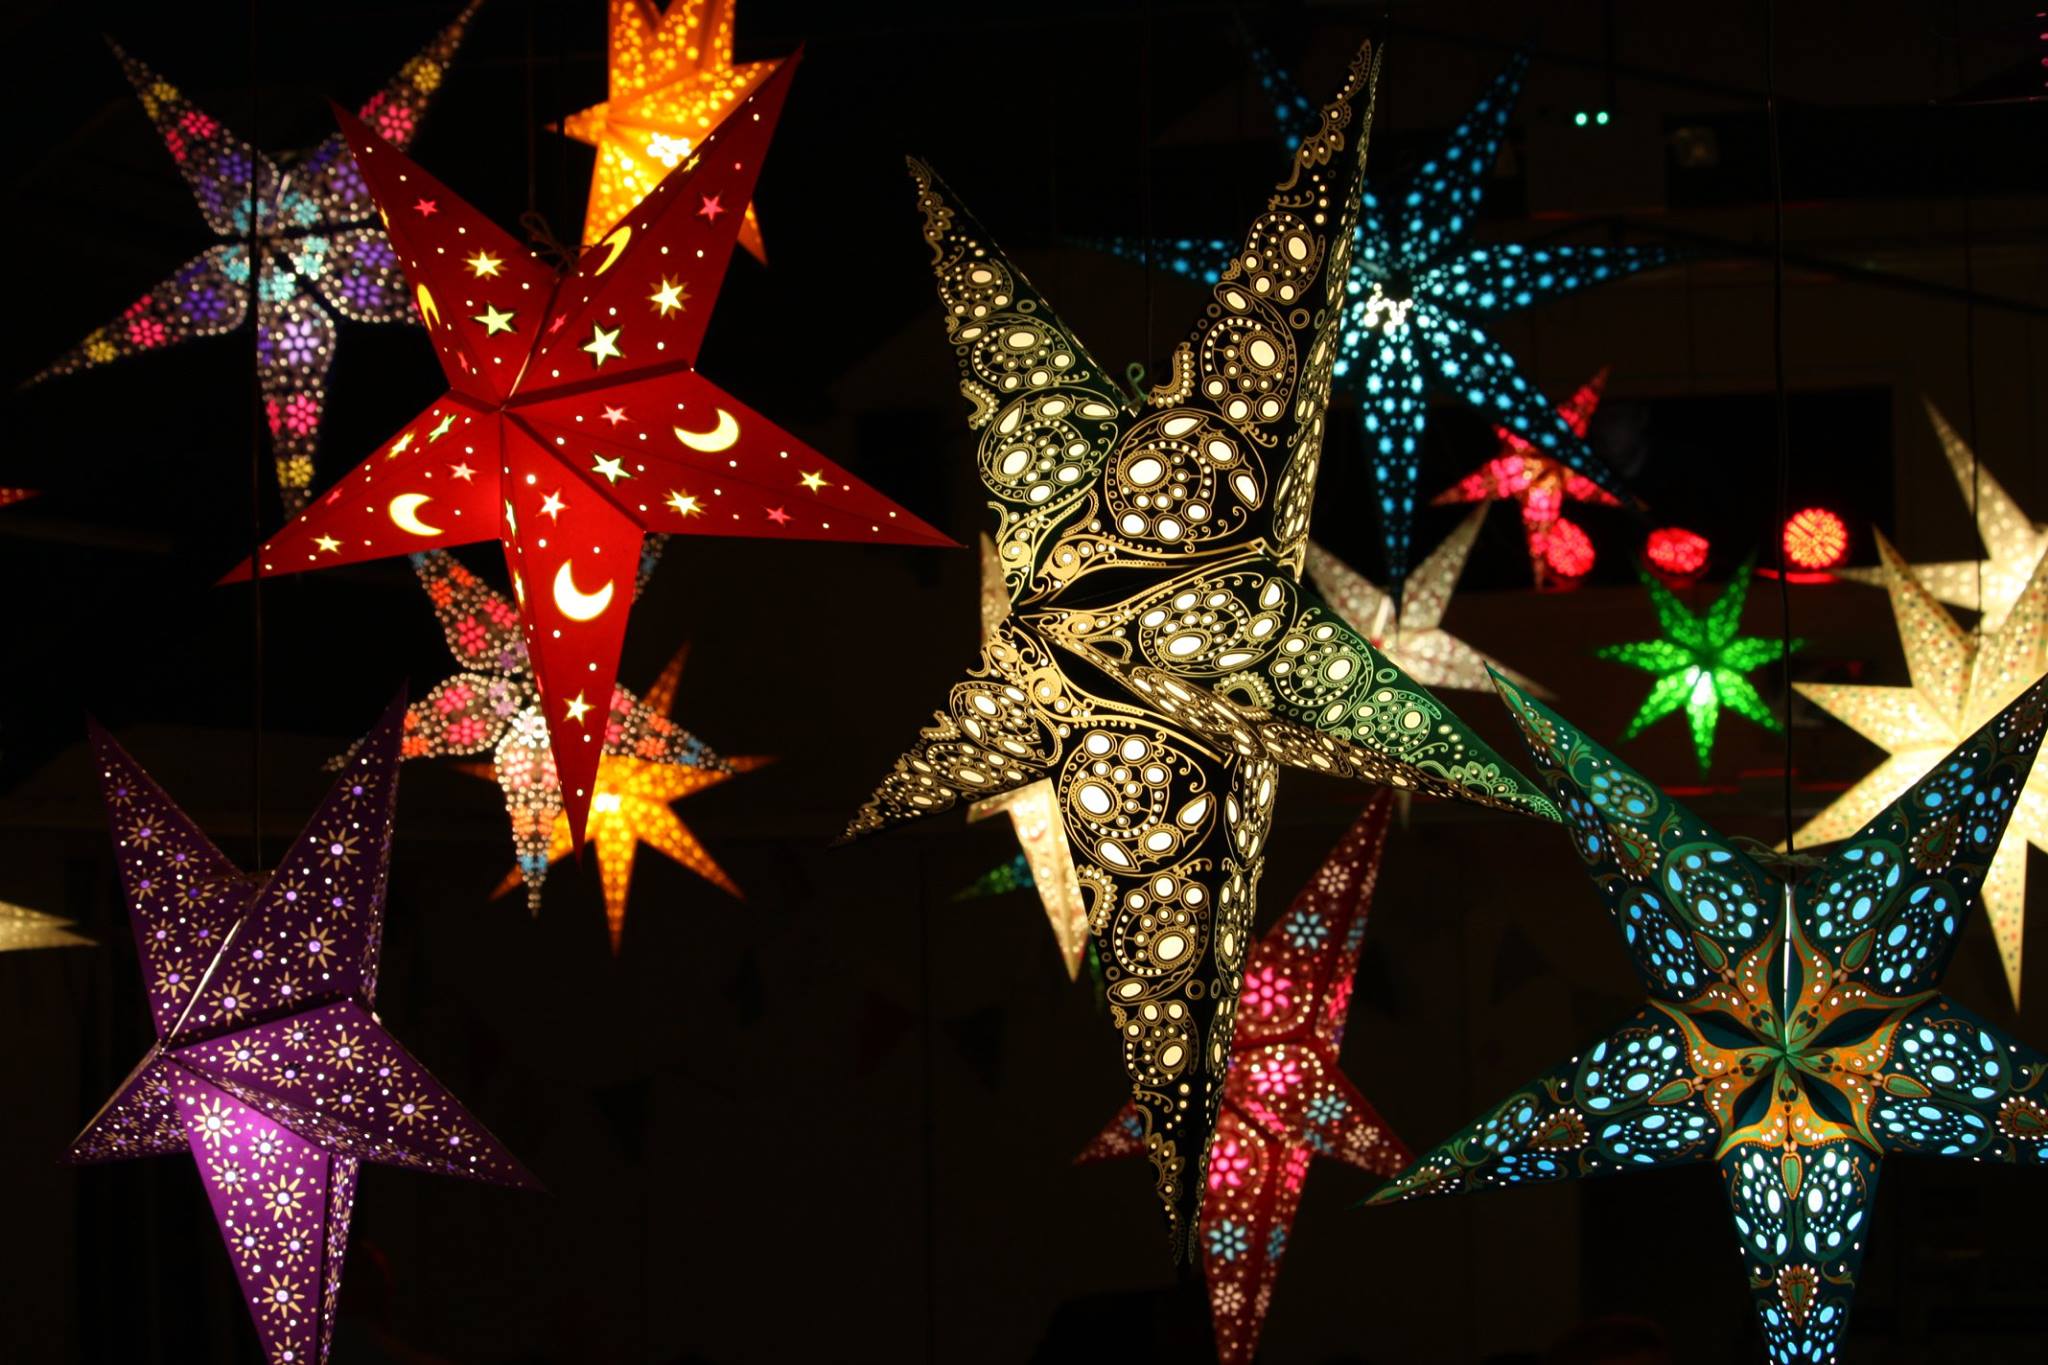 A World of Light - Origins of paper star lights